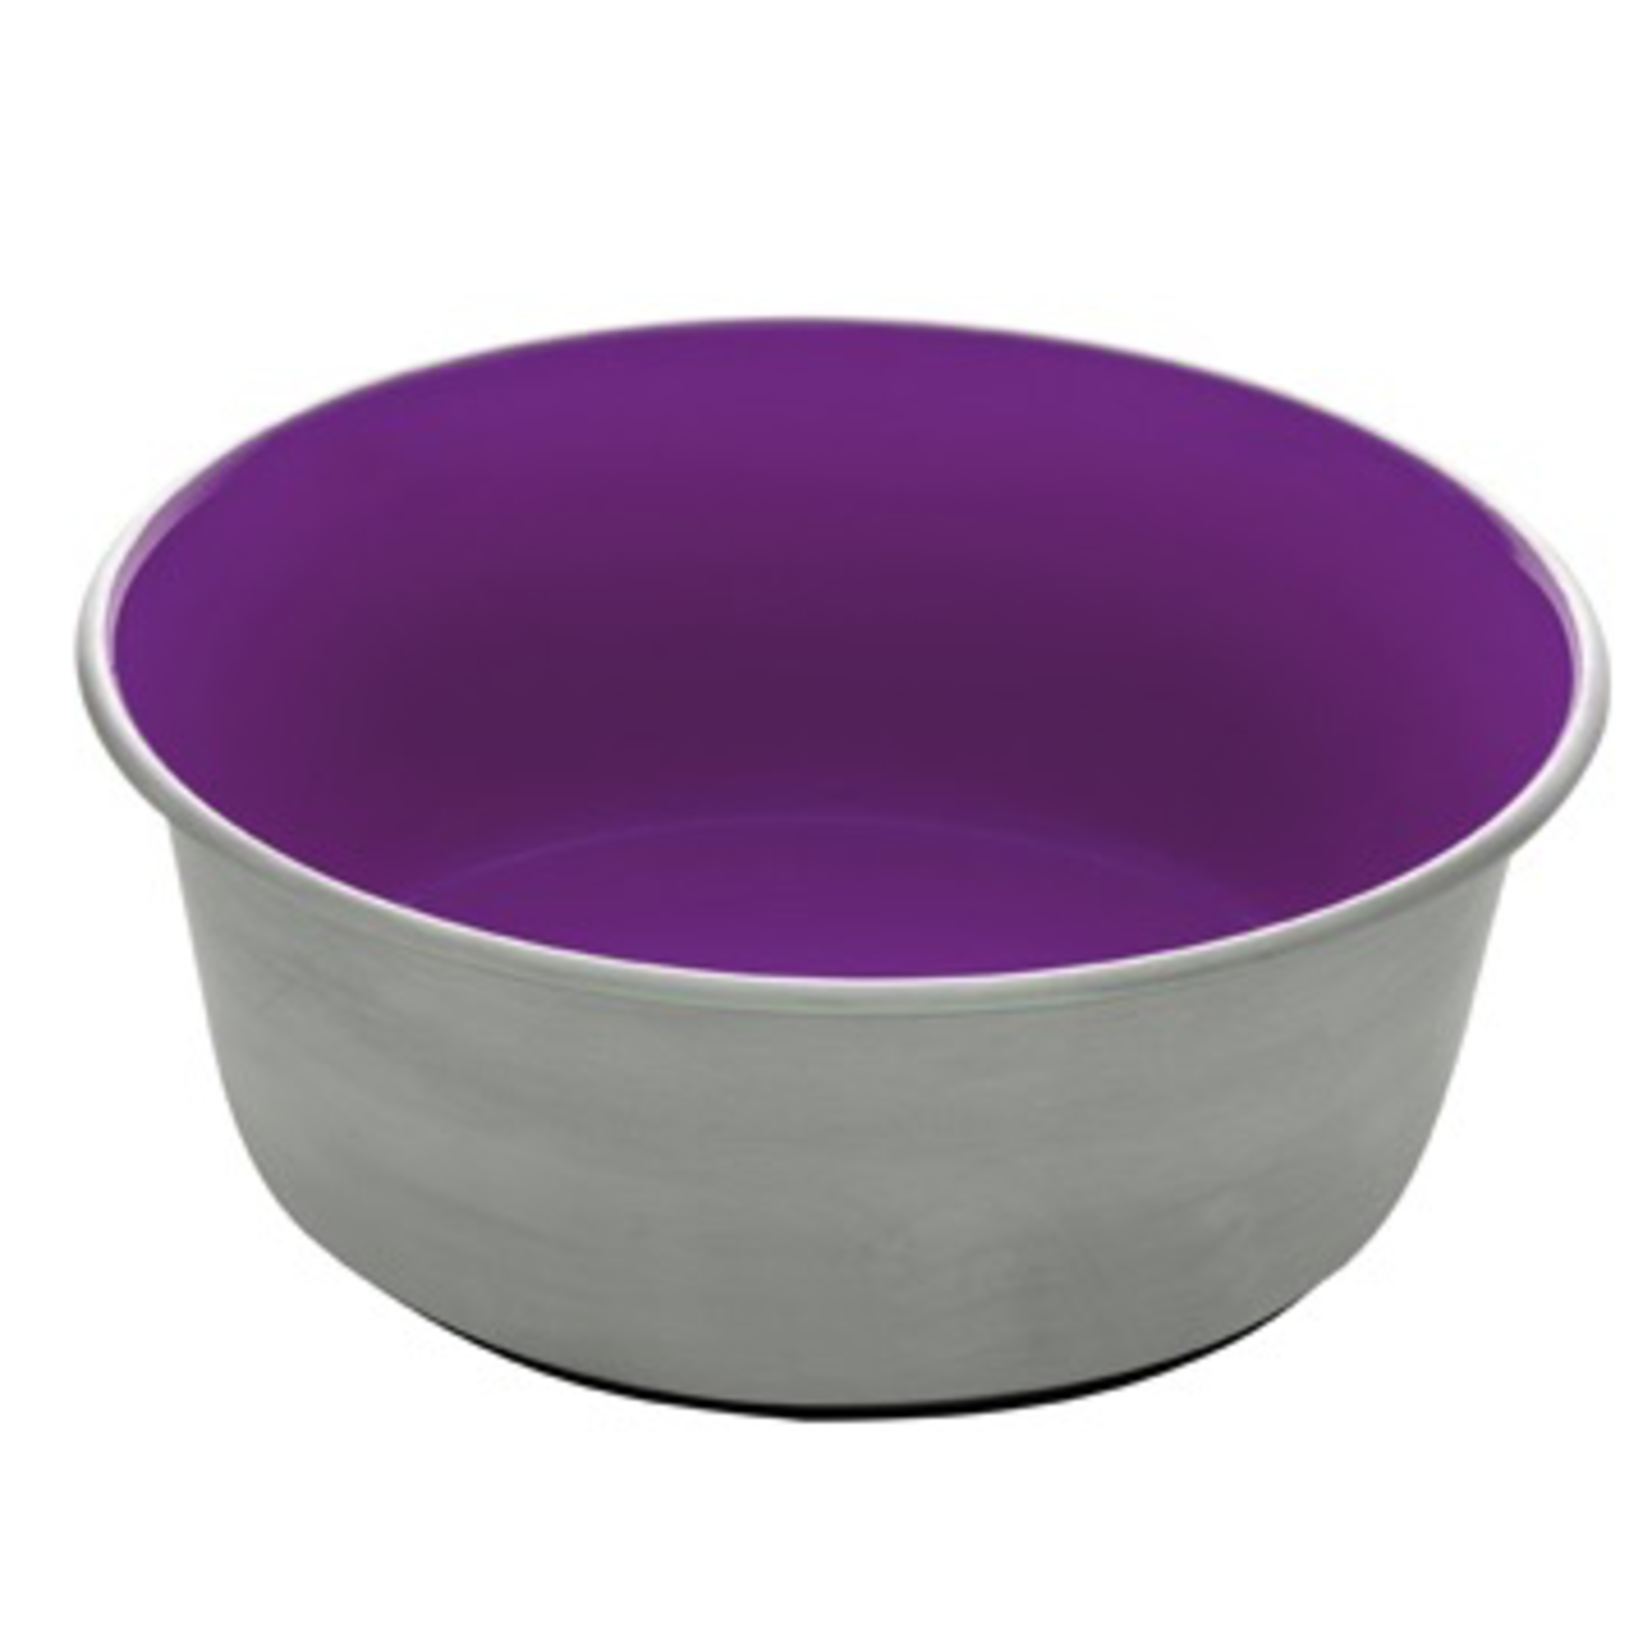 DOG IT (W) Dogit Stainless Steel Non-Skid Dog Bowl - Purple - 1.15 L (39 fl.oz.)